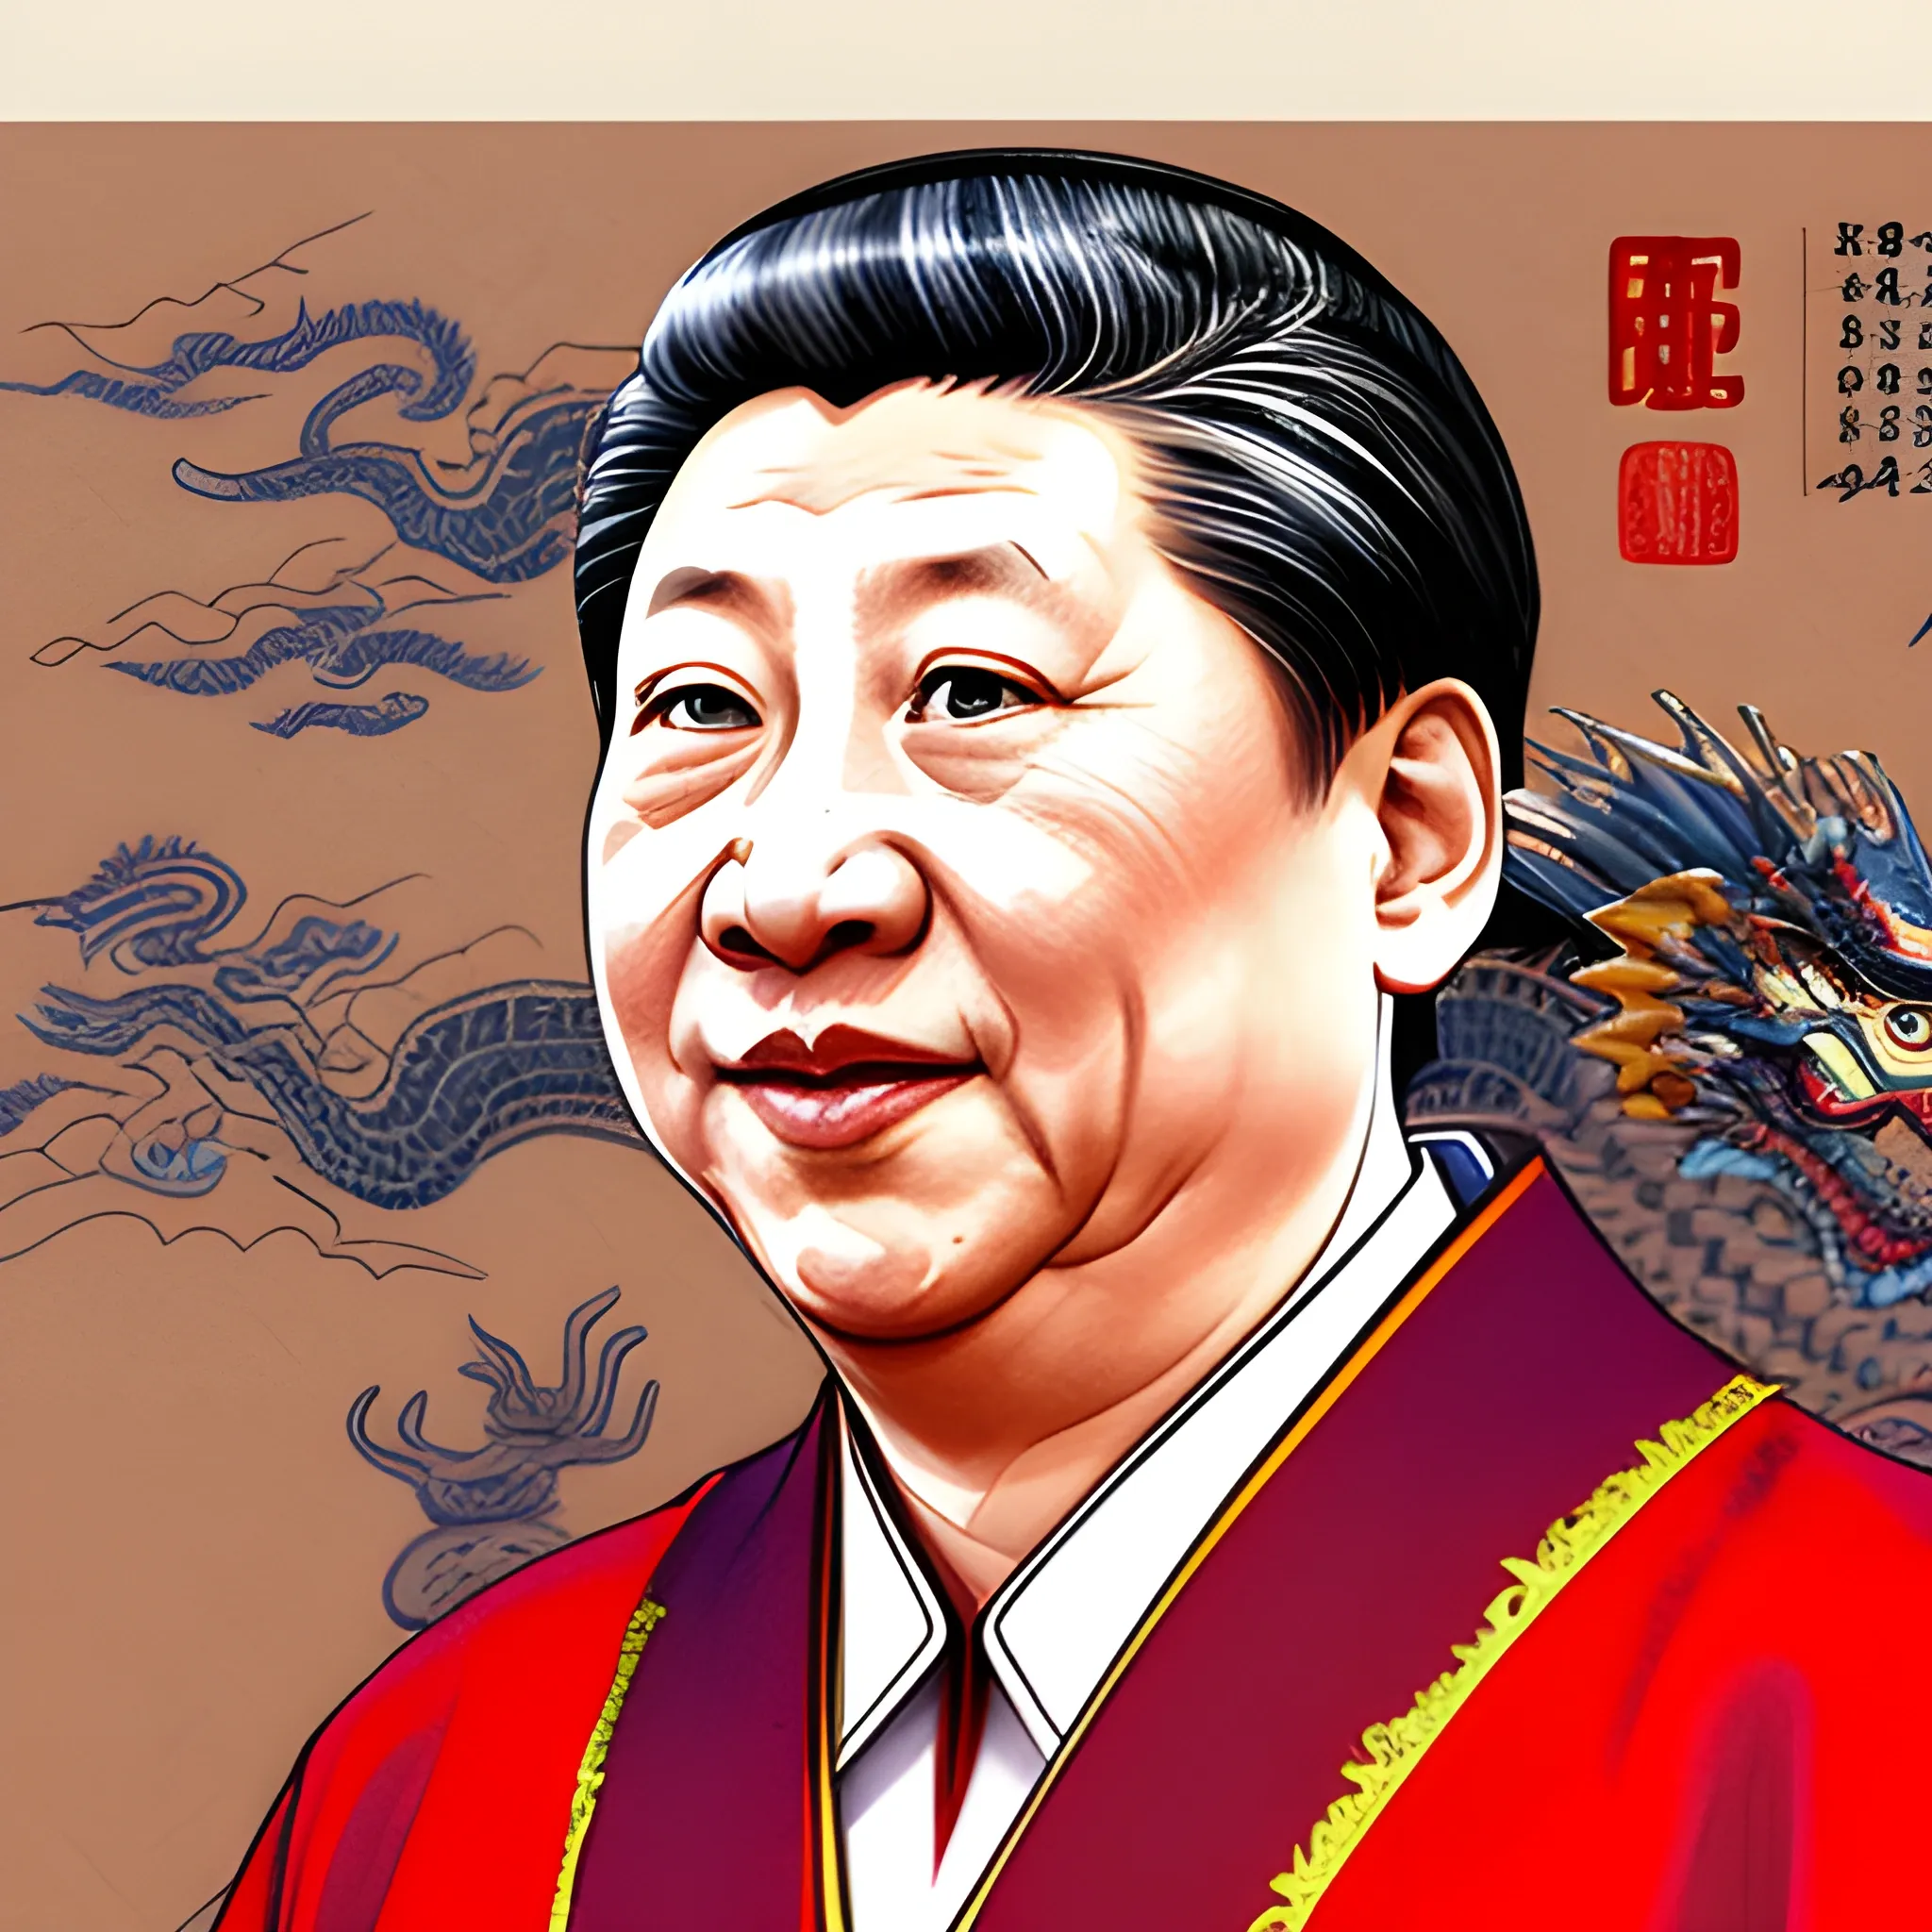 xi president wearing dragon robe, chinese leader, illustration